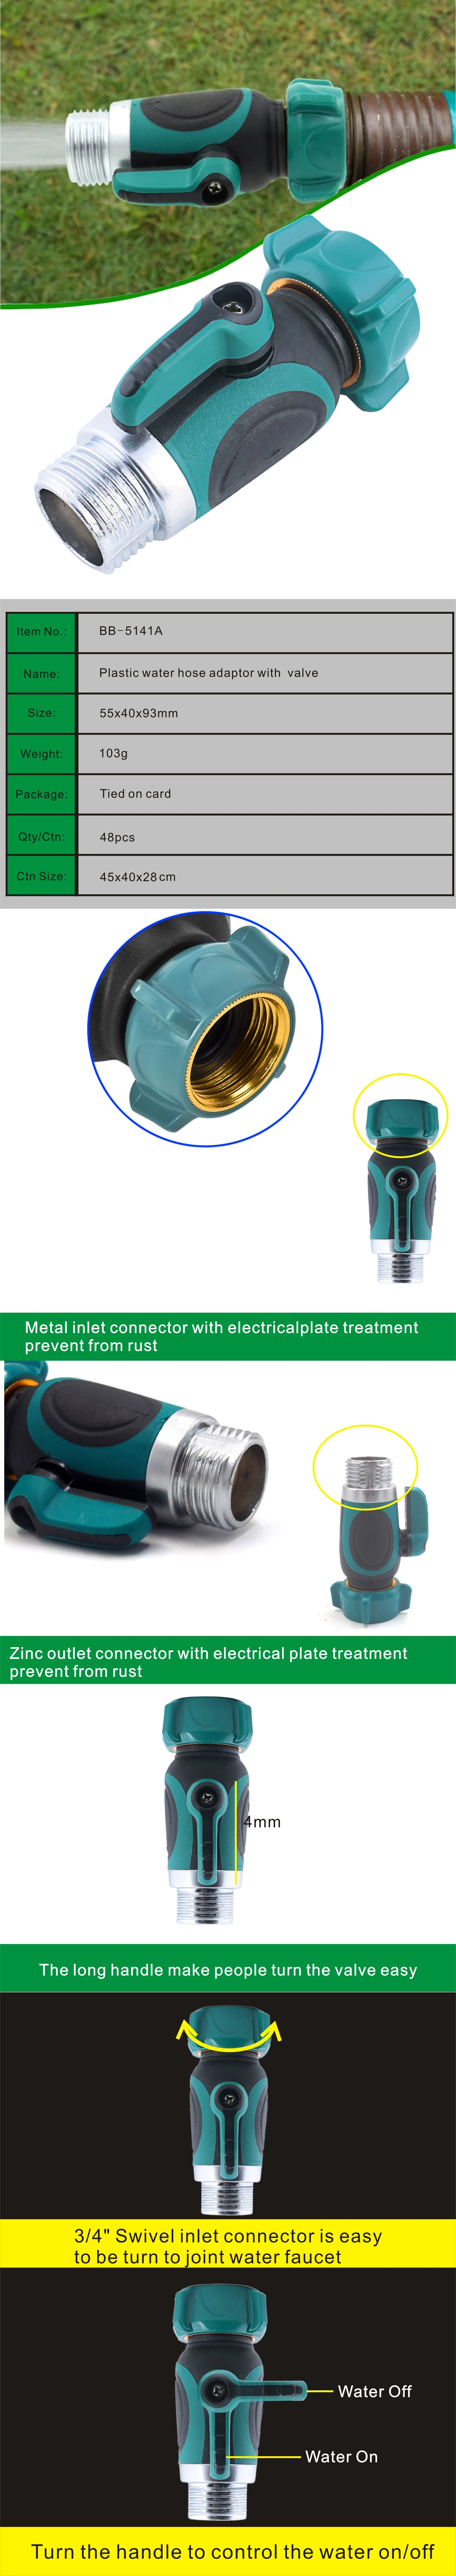 3/4" garden water hose adaptor with valve for outdoor